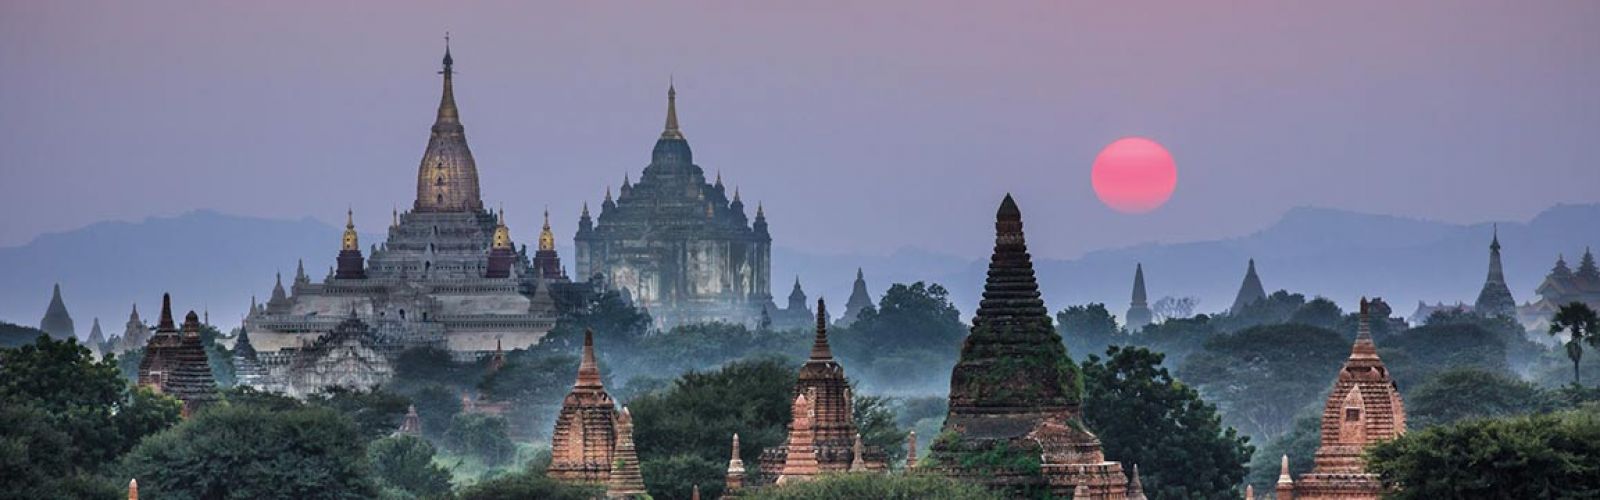 Myanmar Classic Highlight Tours